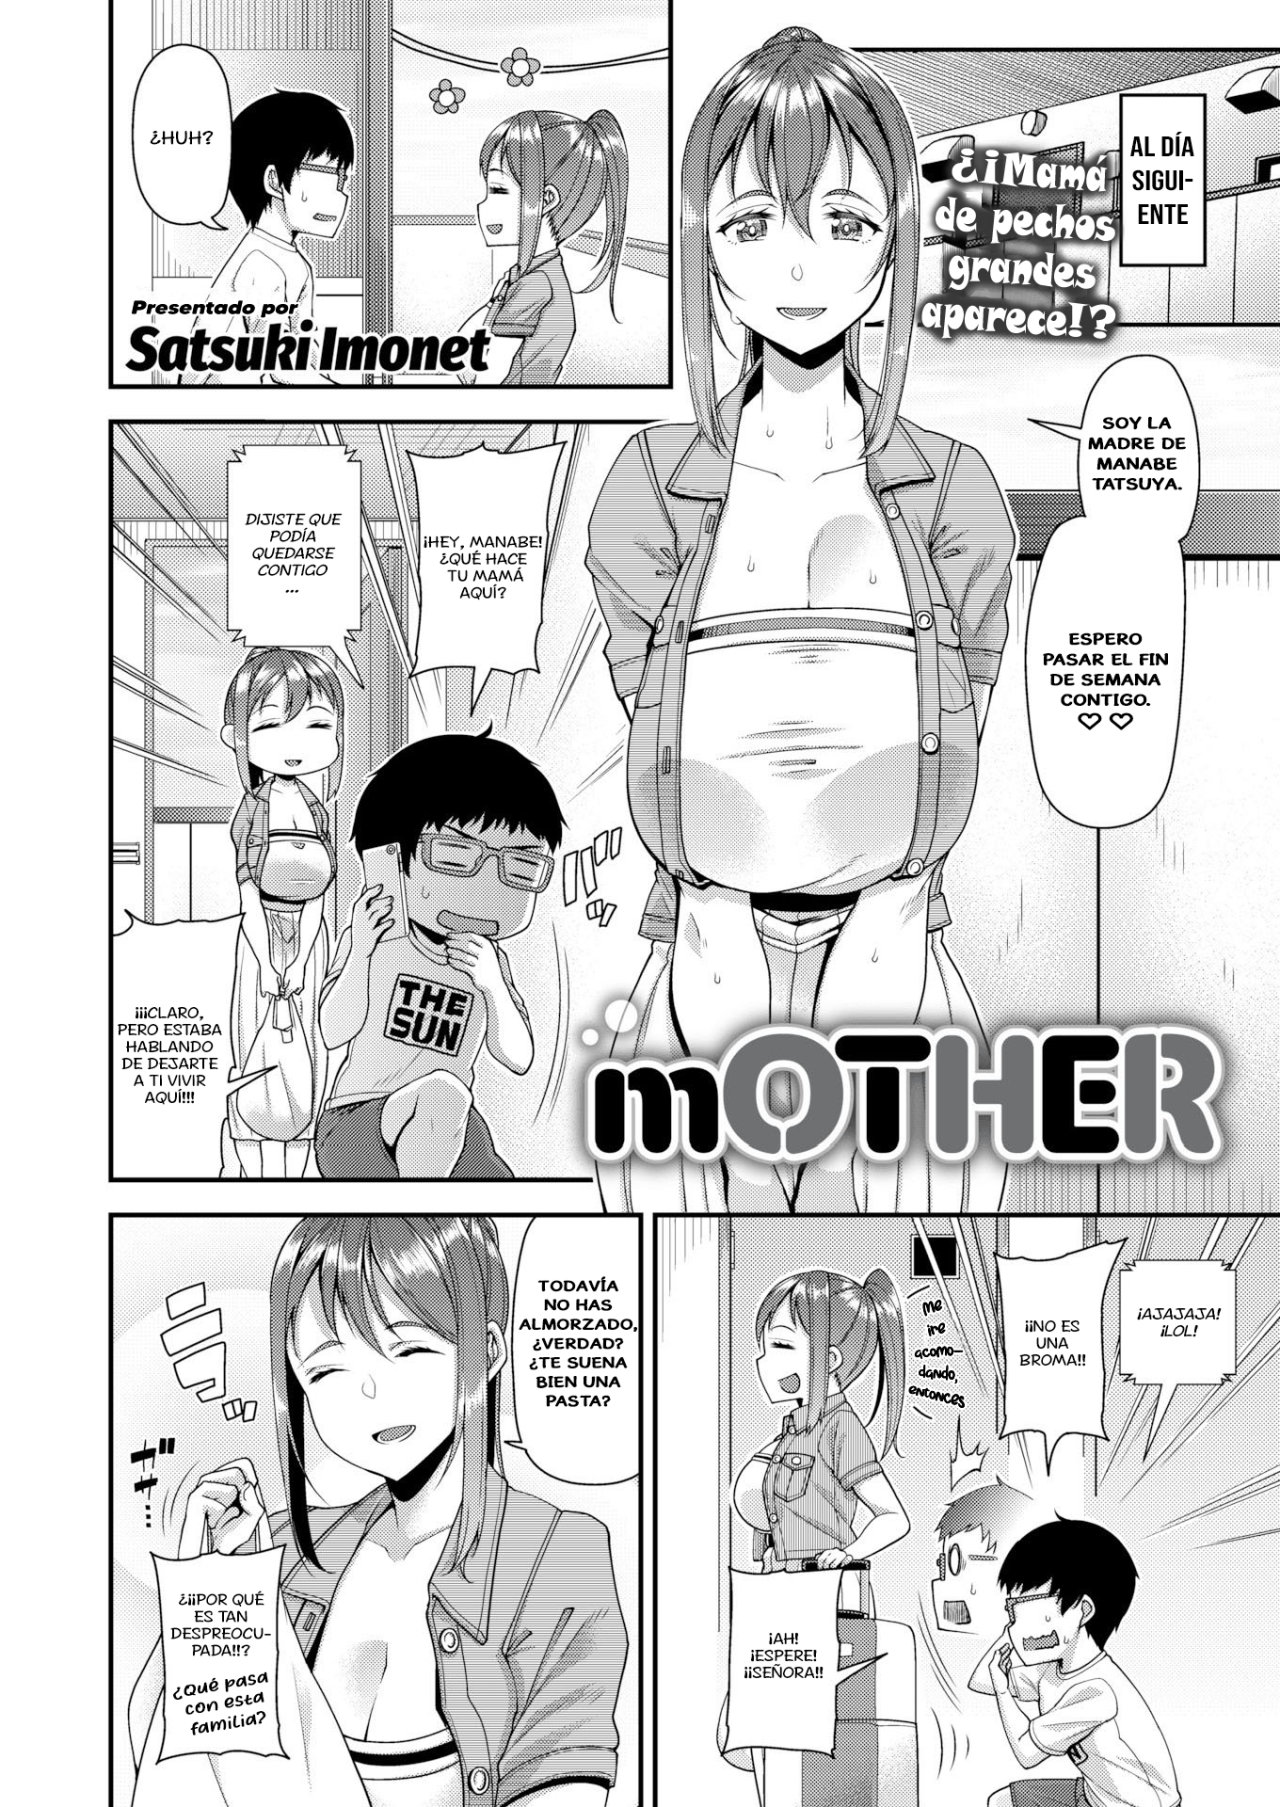 mOTHER (Satsuki Imonet) - 1